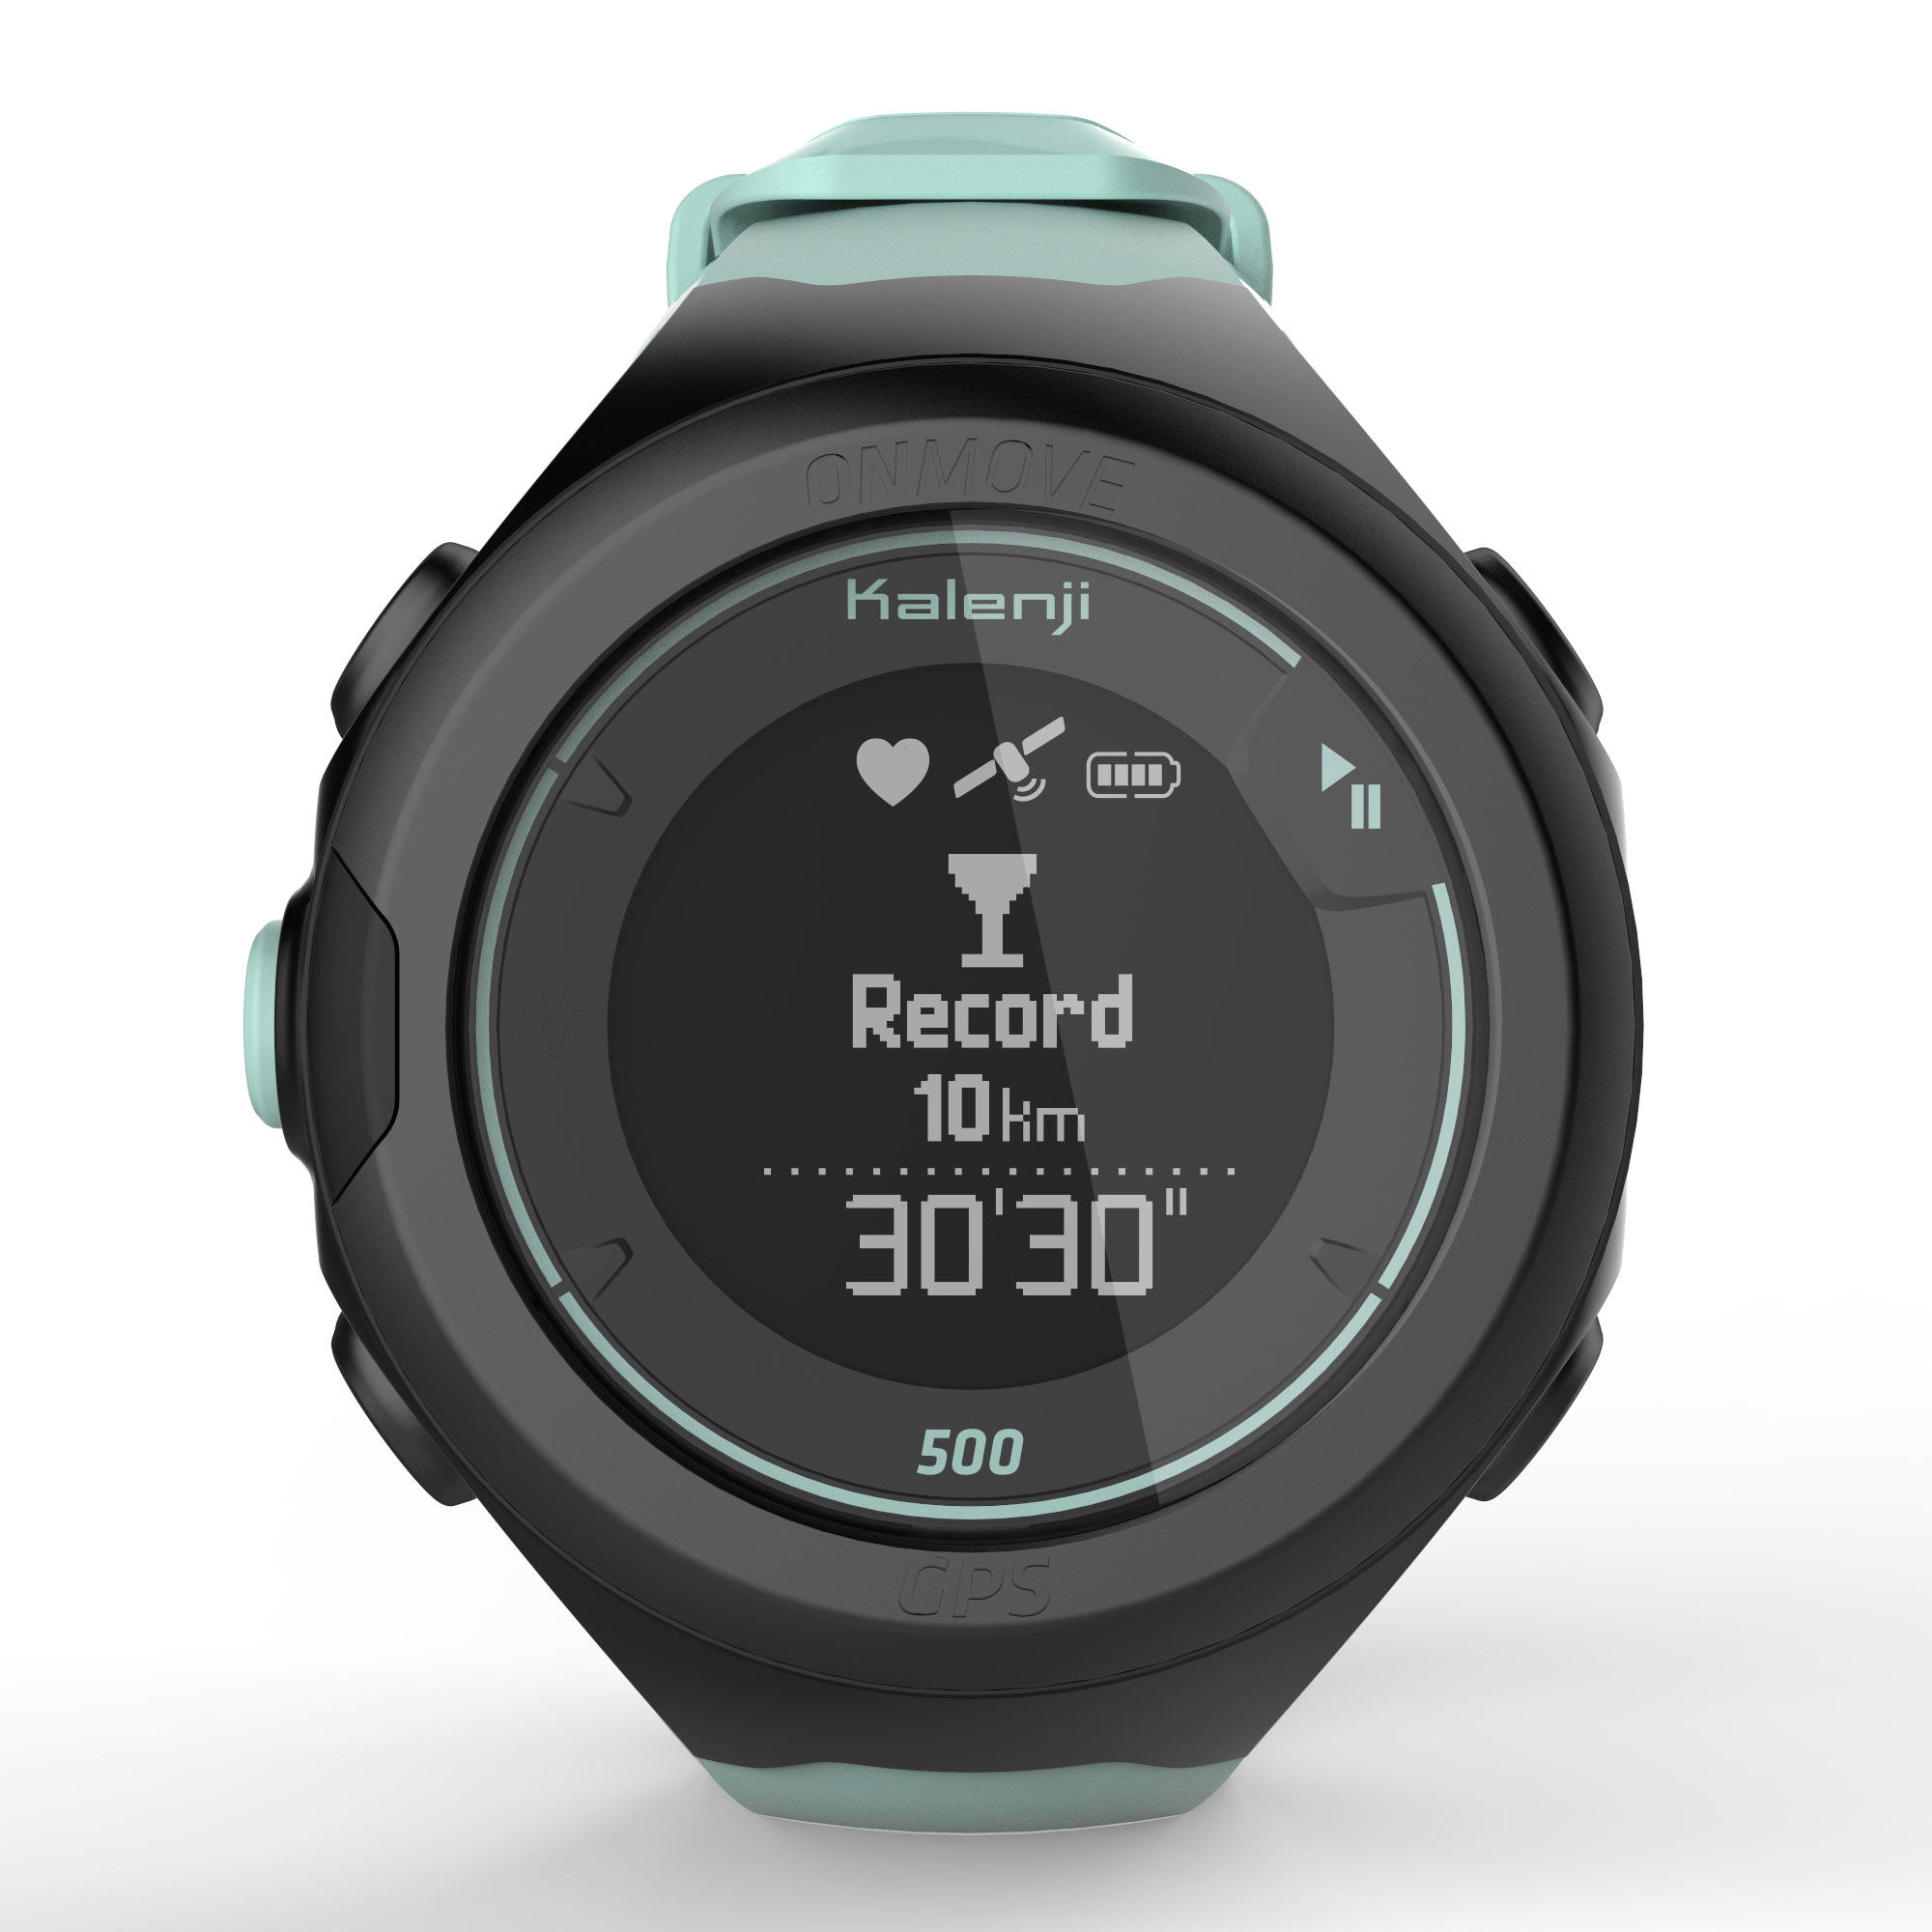 ONmove 500 GPS running watch and wrist heart rate monitor - sea green 9/17